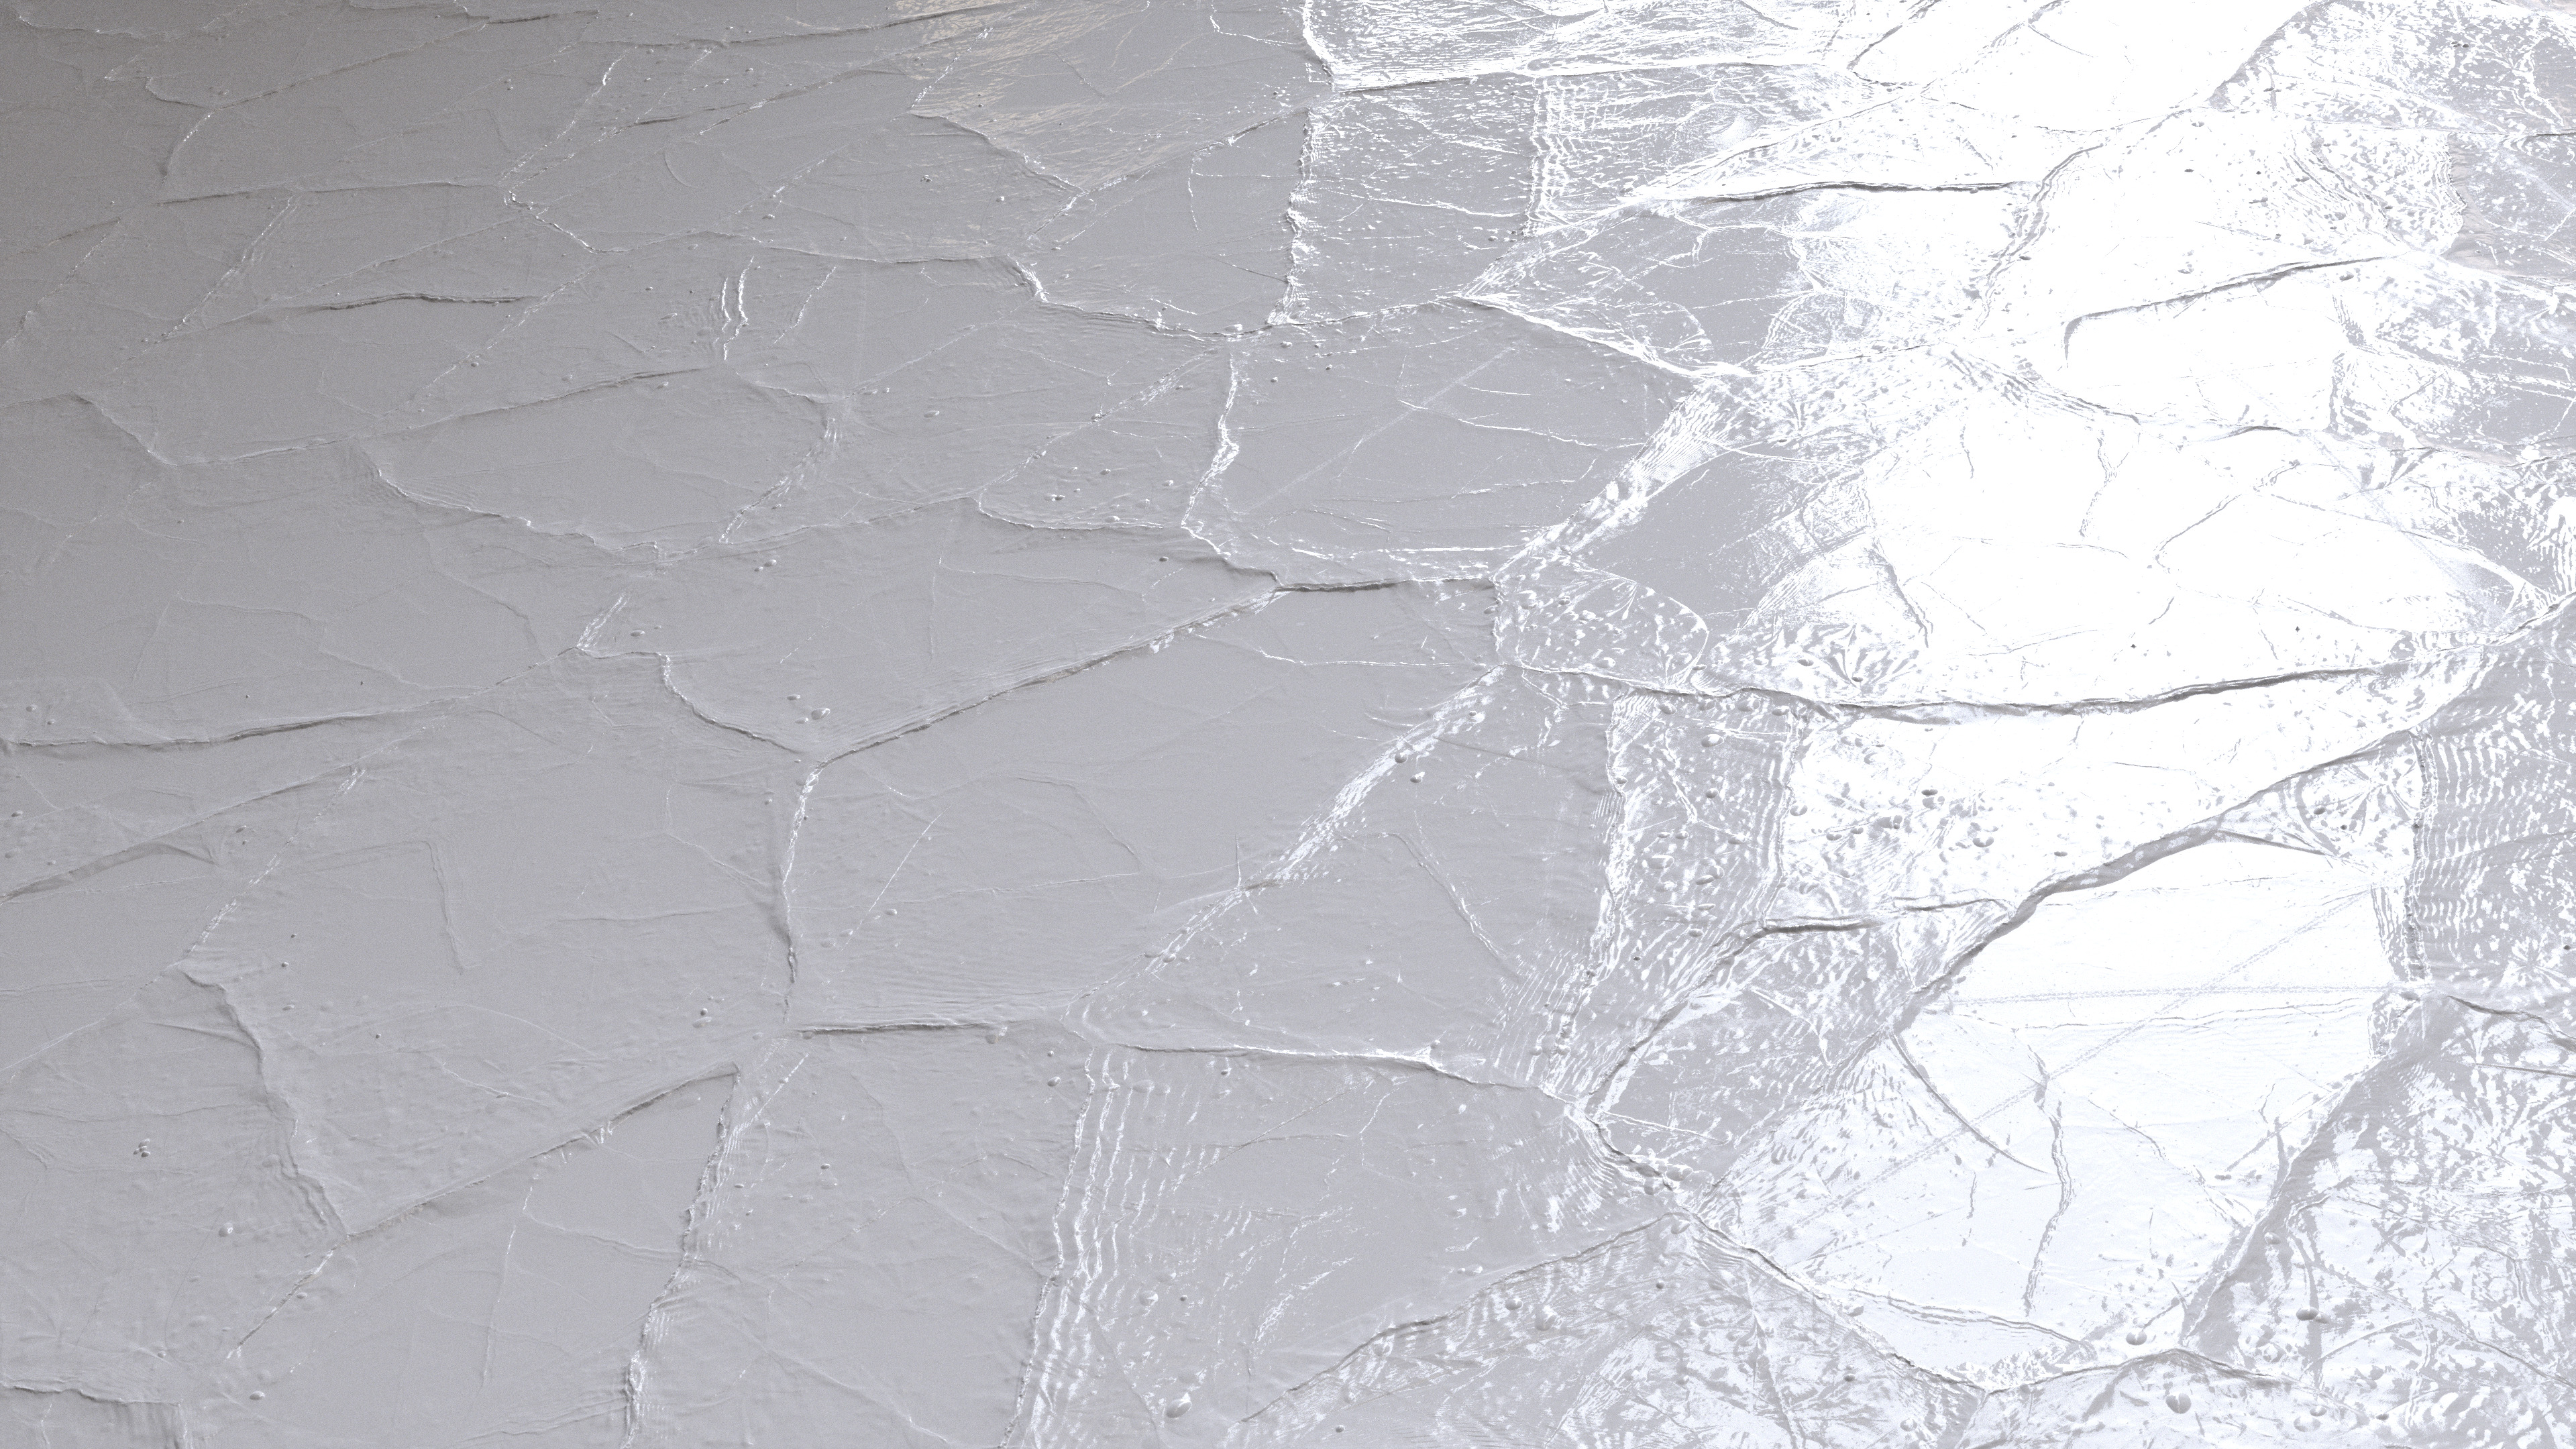 Glyph Of Cracked Ice